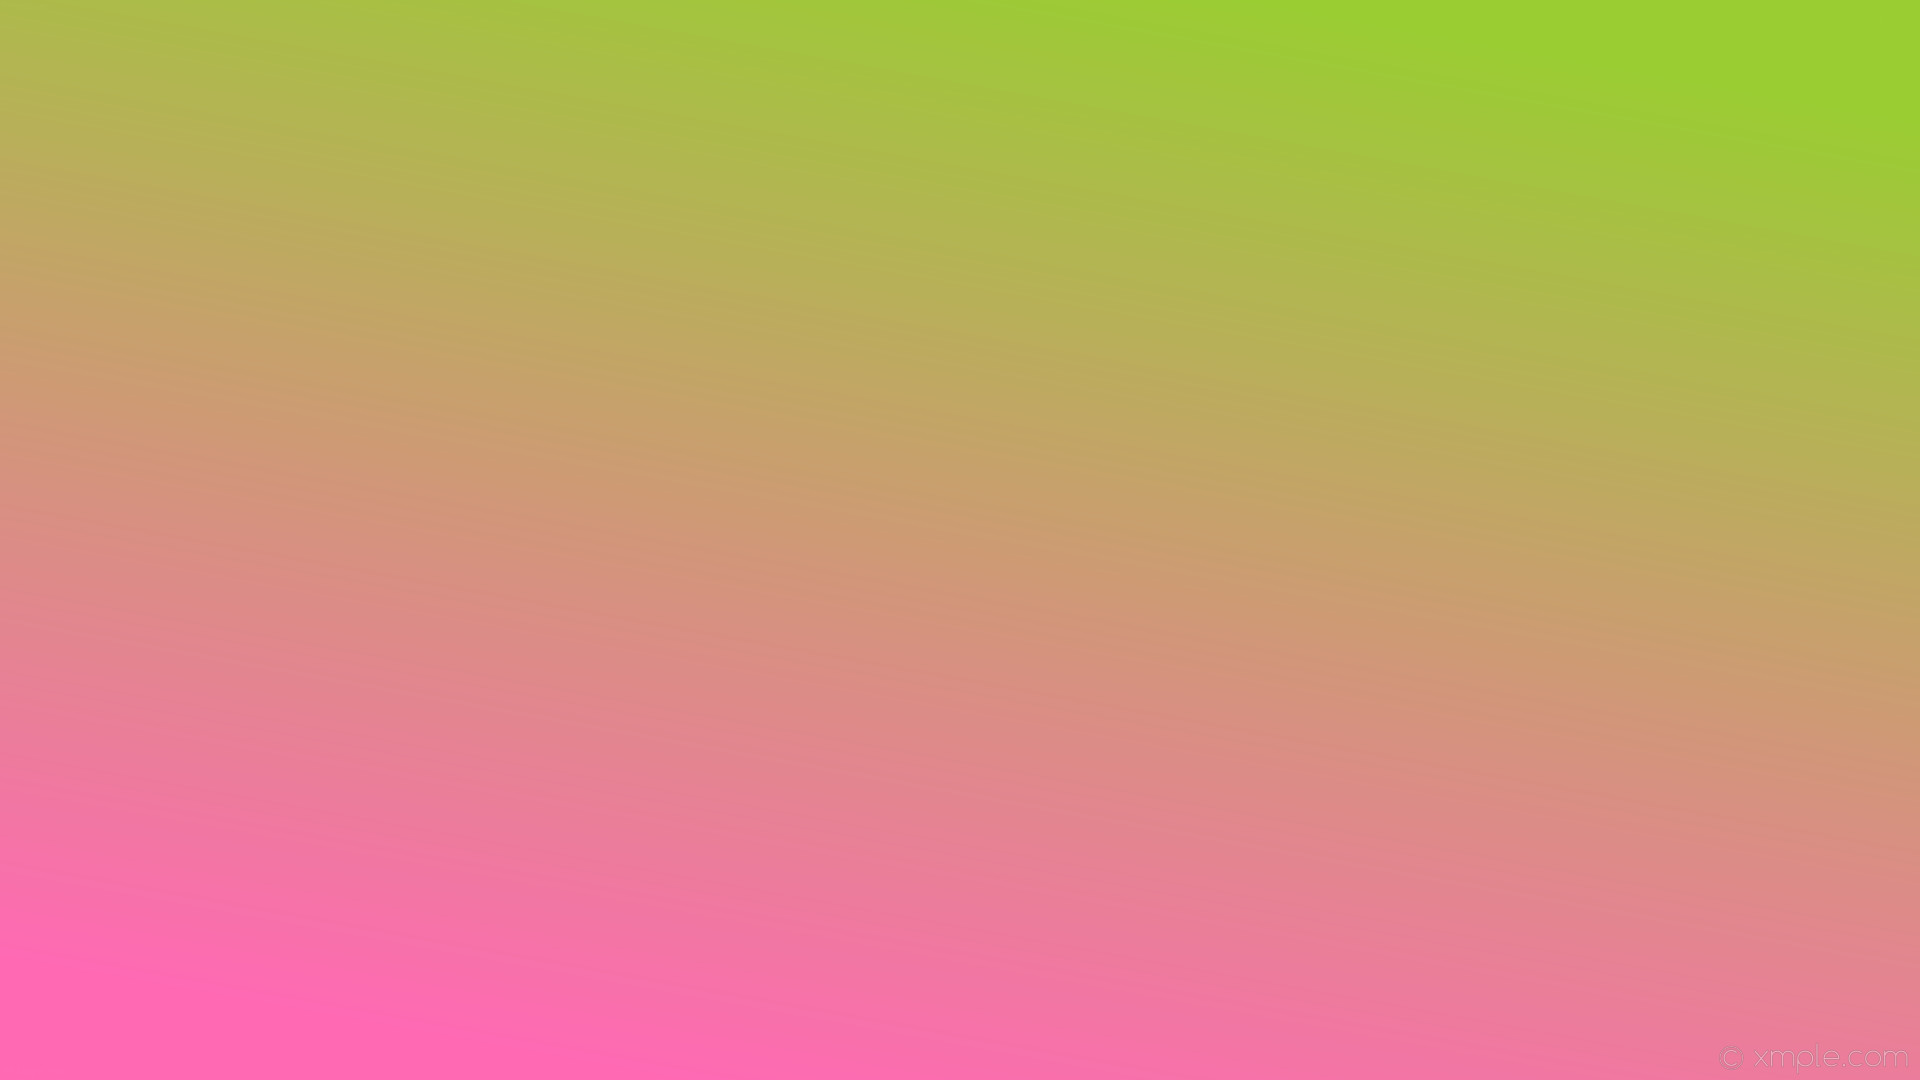 1920x1080 wallpaper green pink gradient linear hot pink yellow green #ff69b4 #9acd32  240Â°